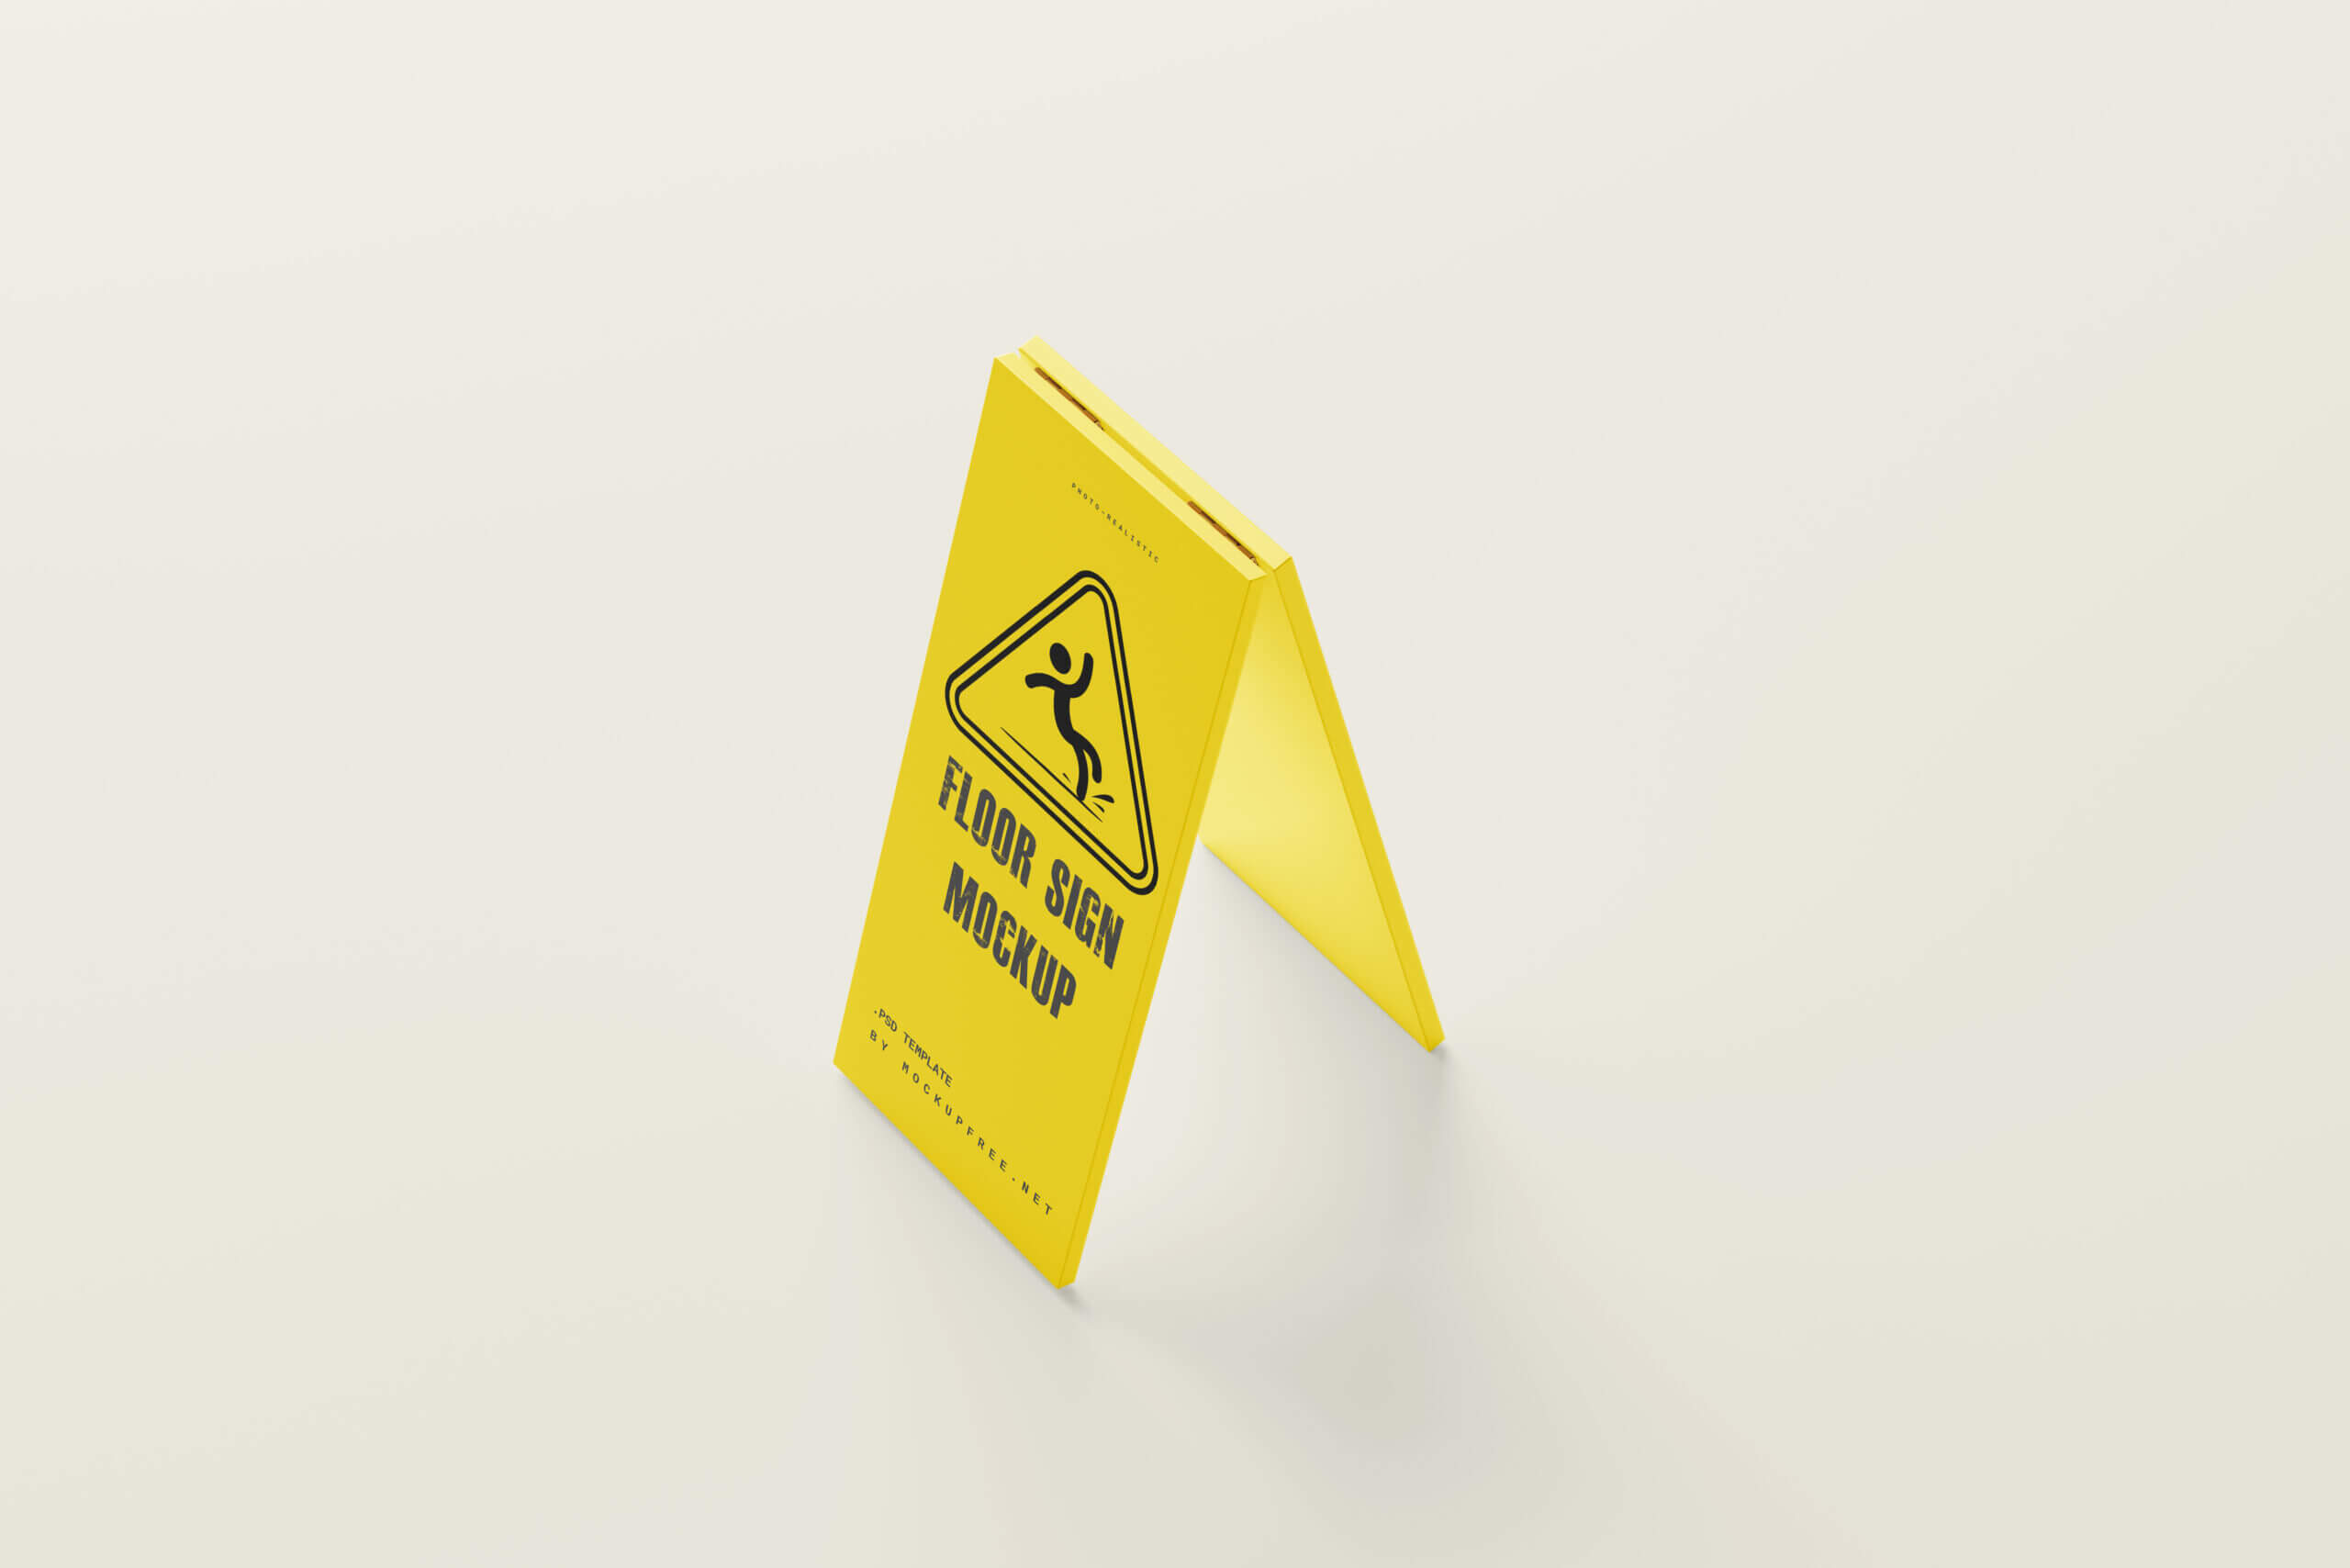 5 Free Wet Floor / Caution Sign Mockup PSD Files